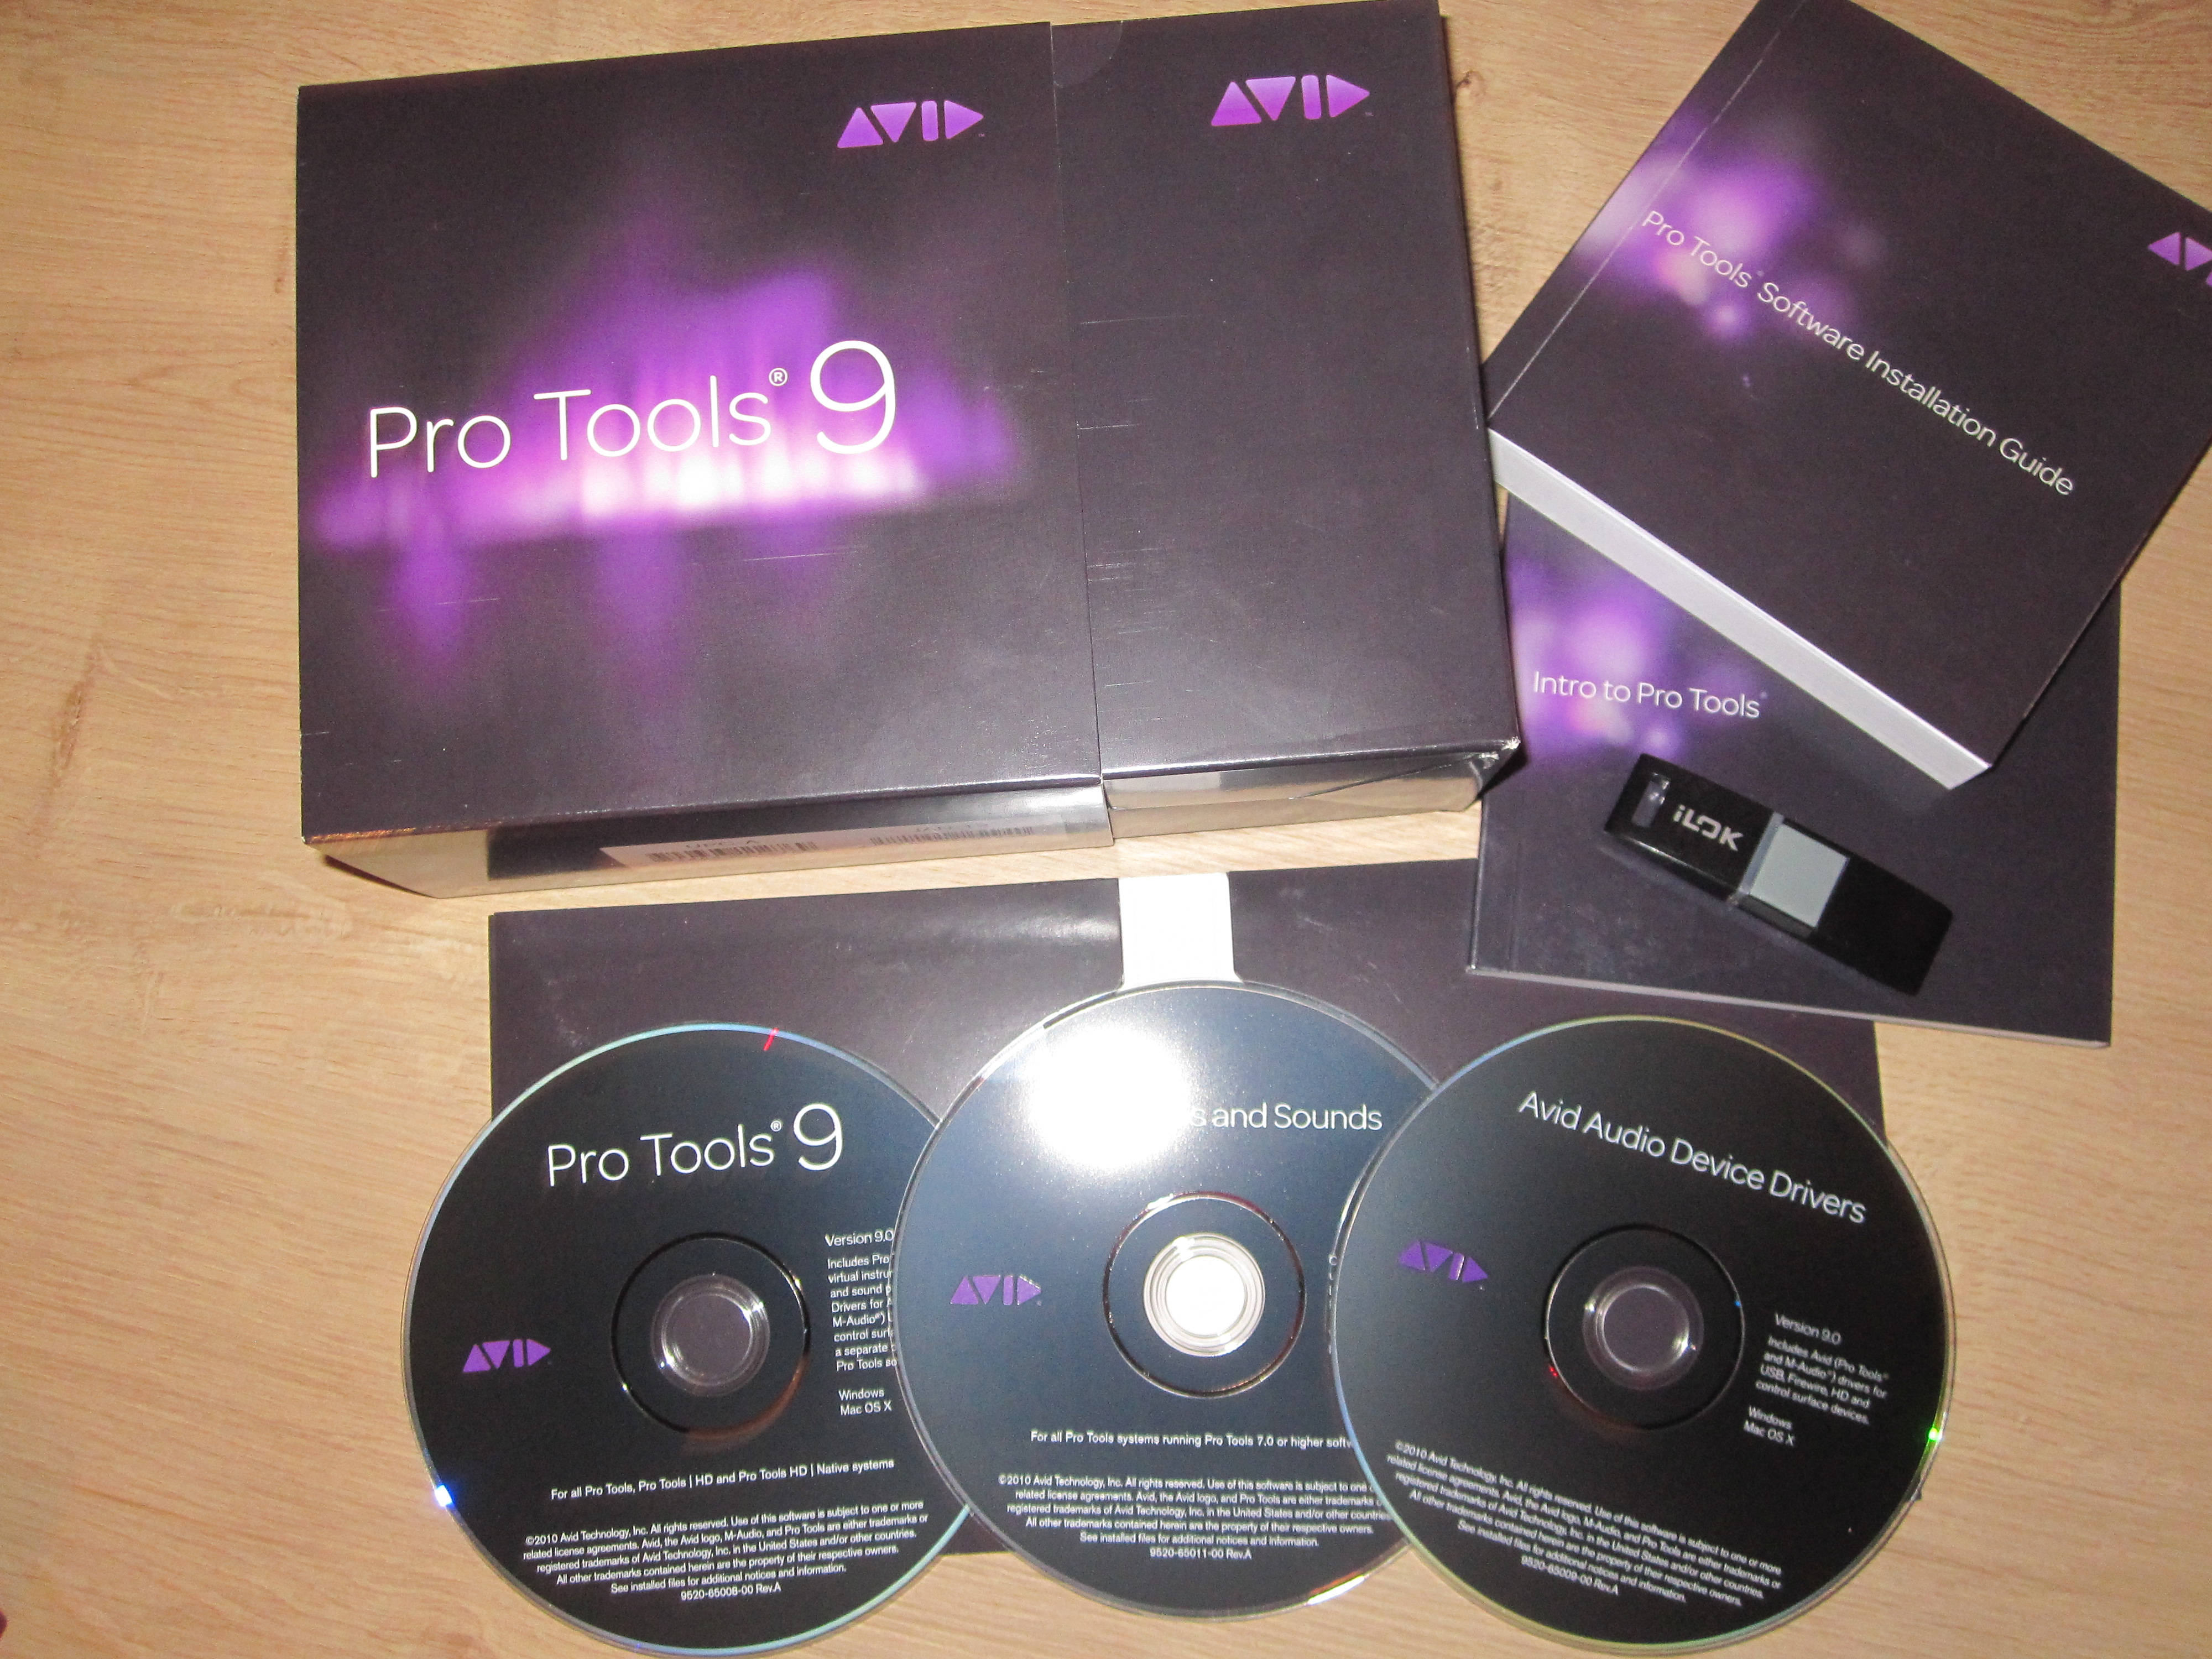 pro tools 11 mac system requirements